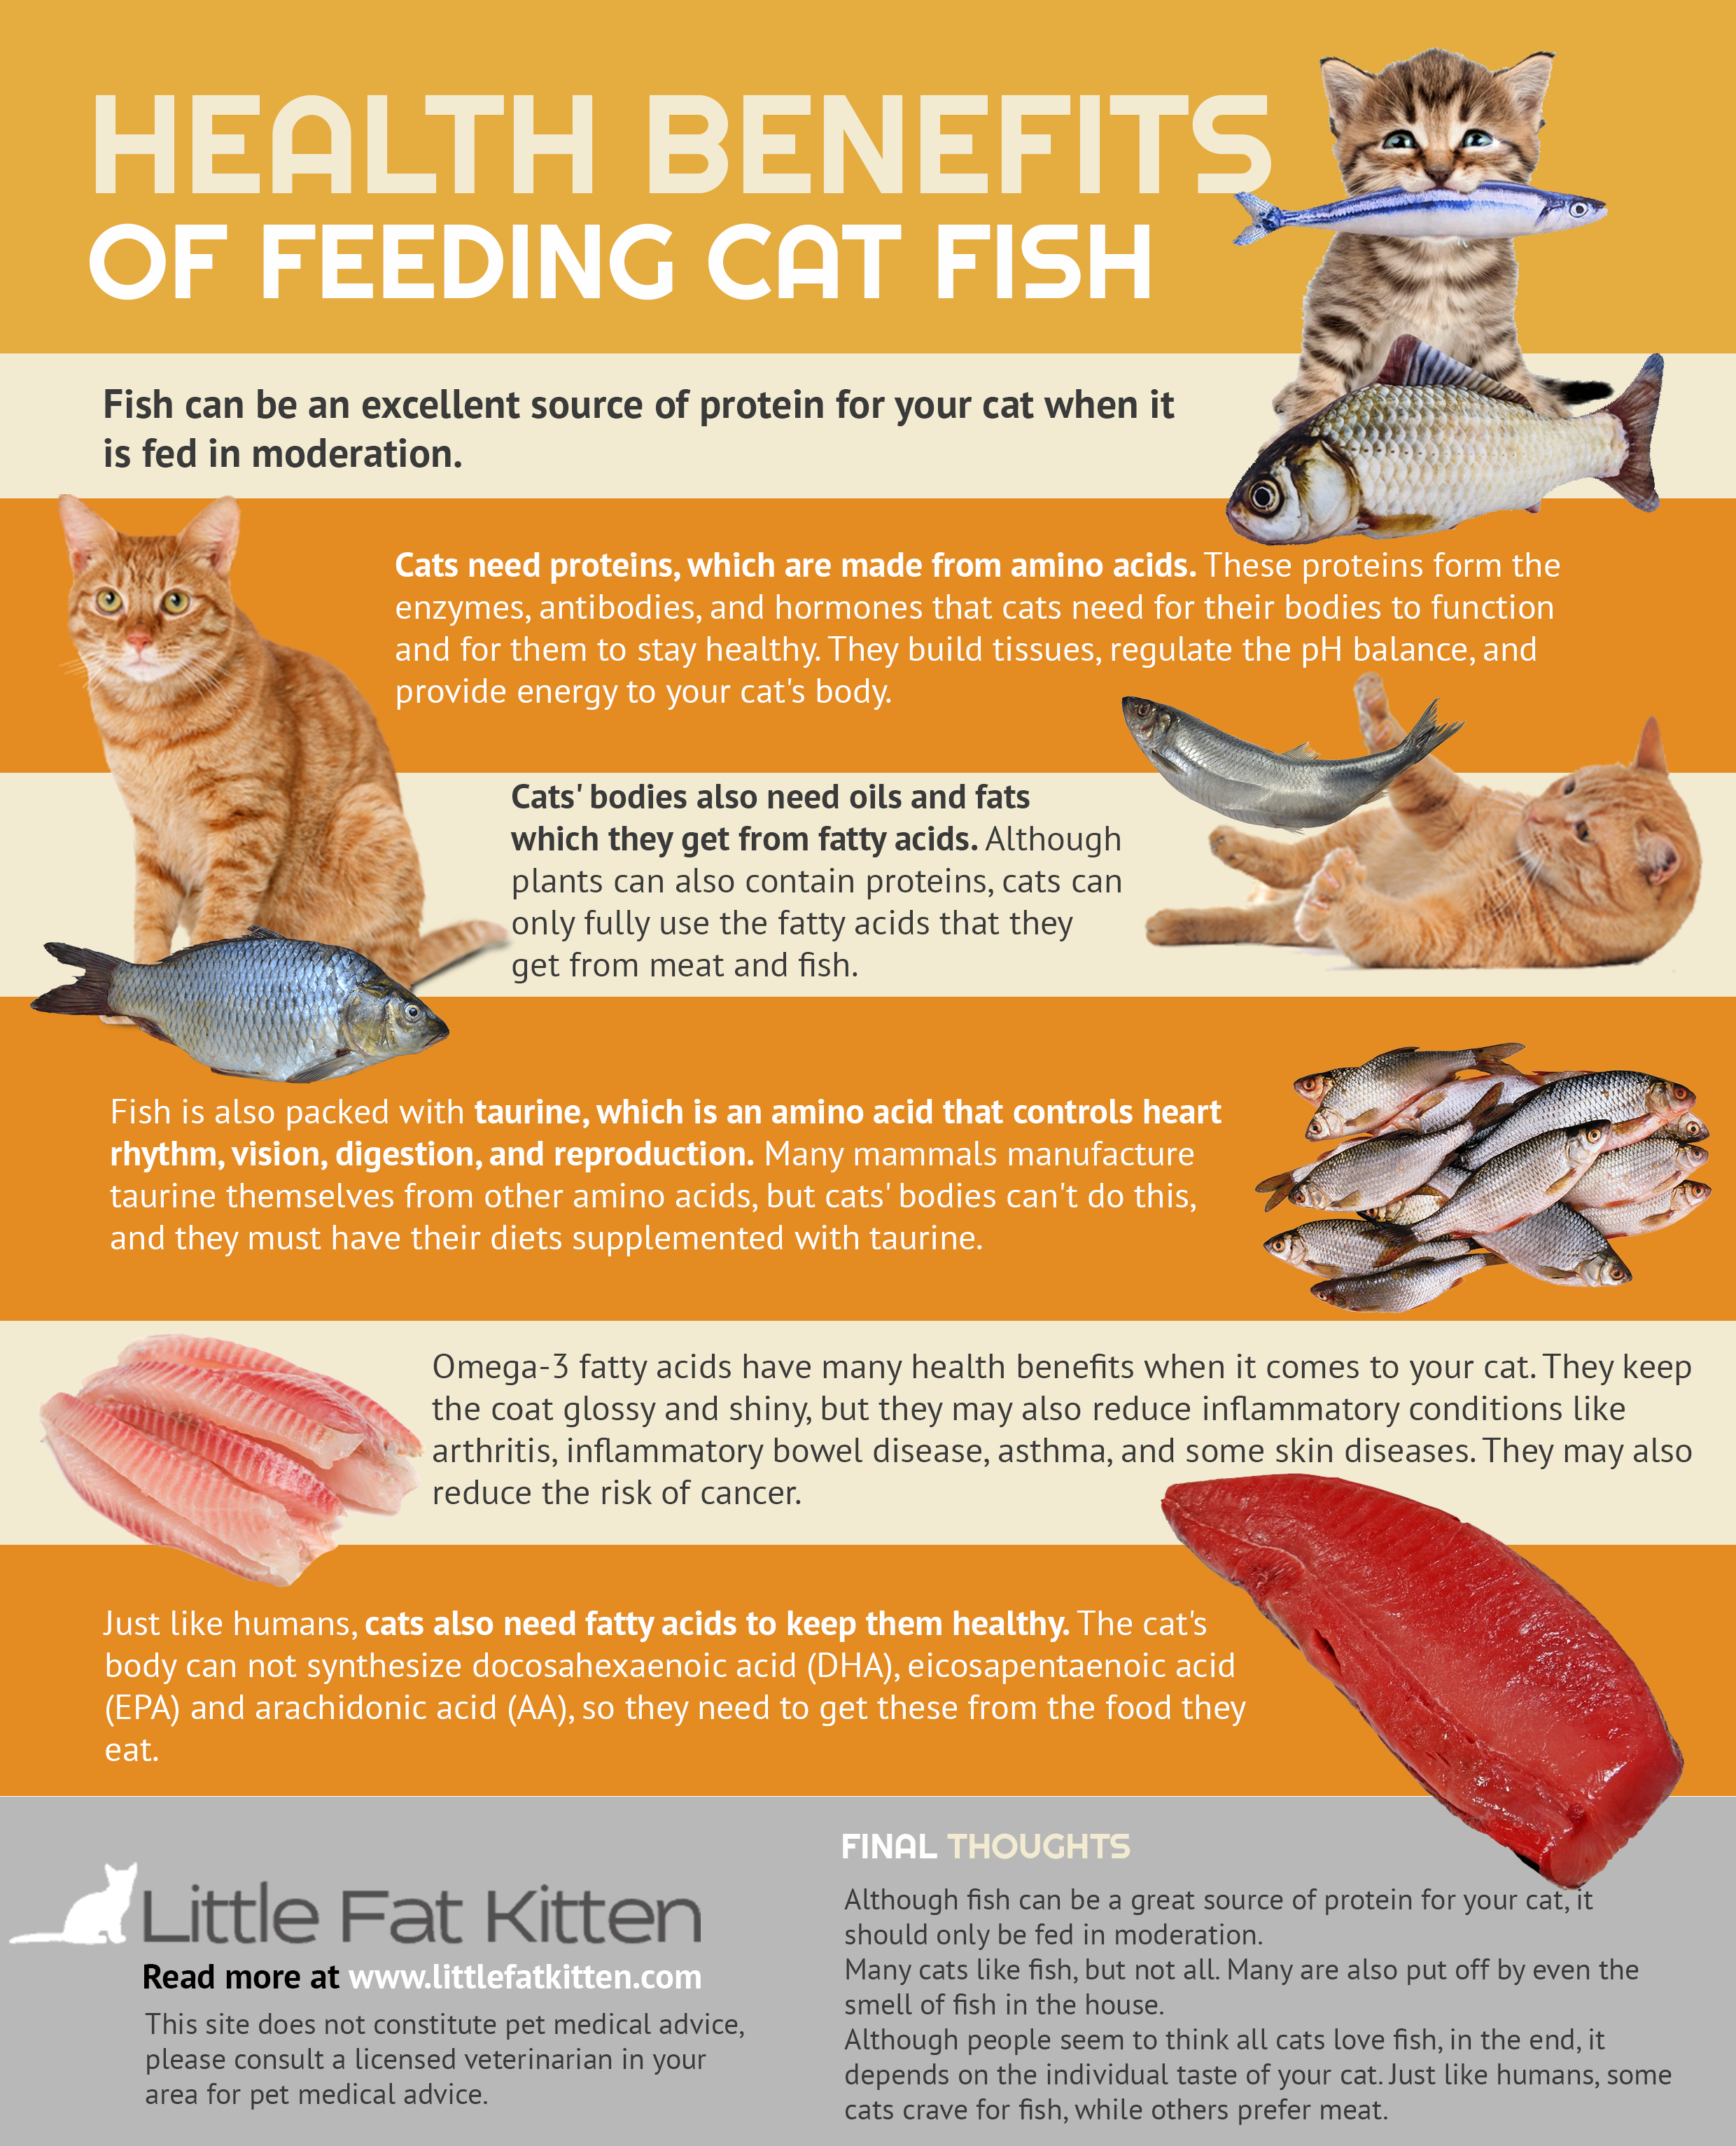 Health benefits of feeding cat fish